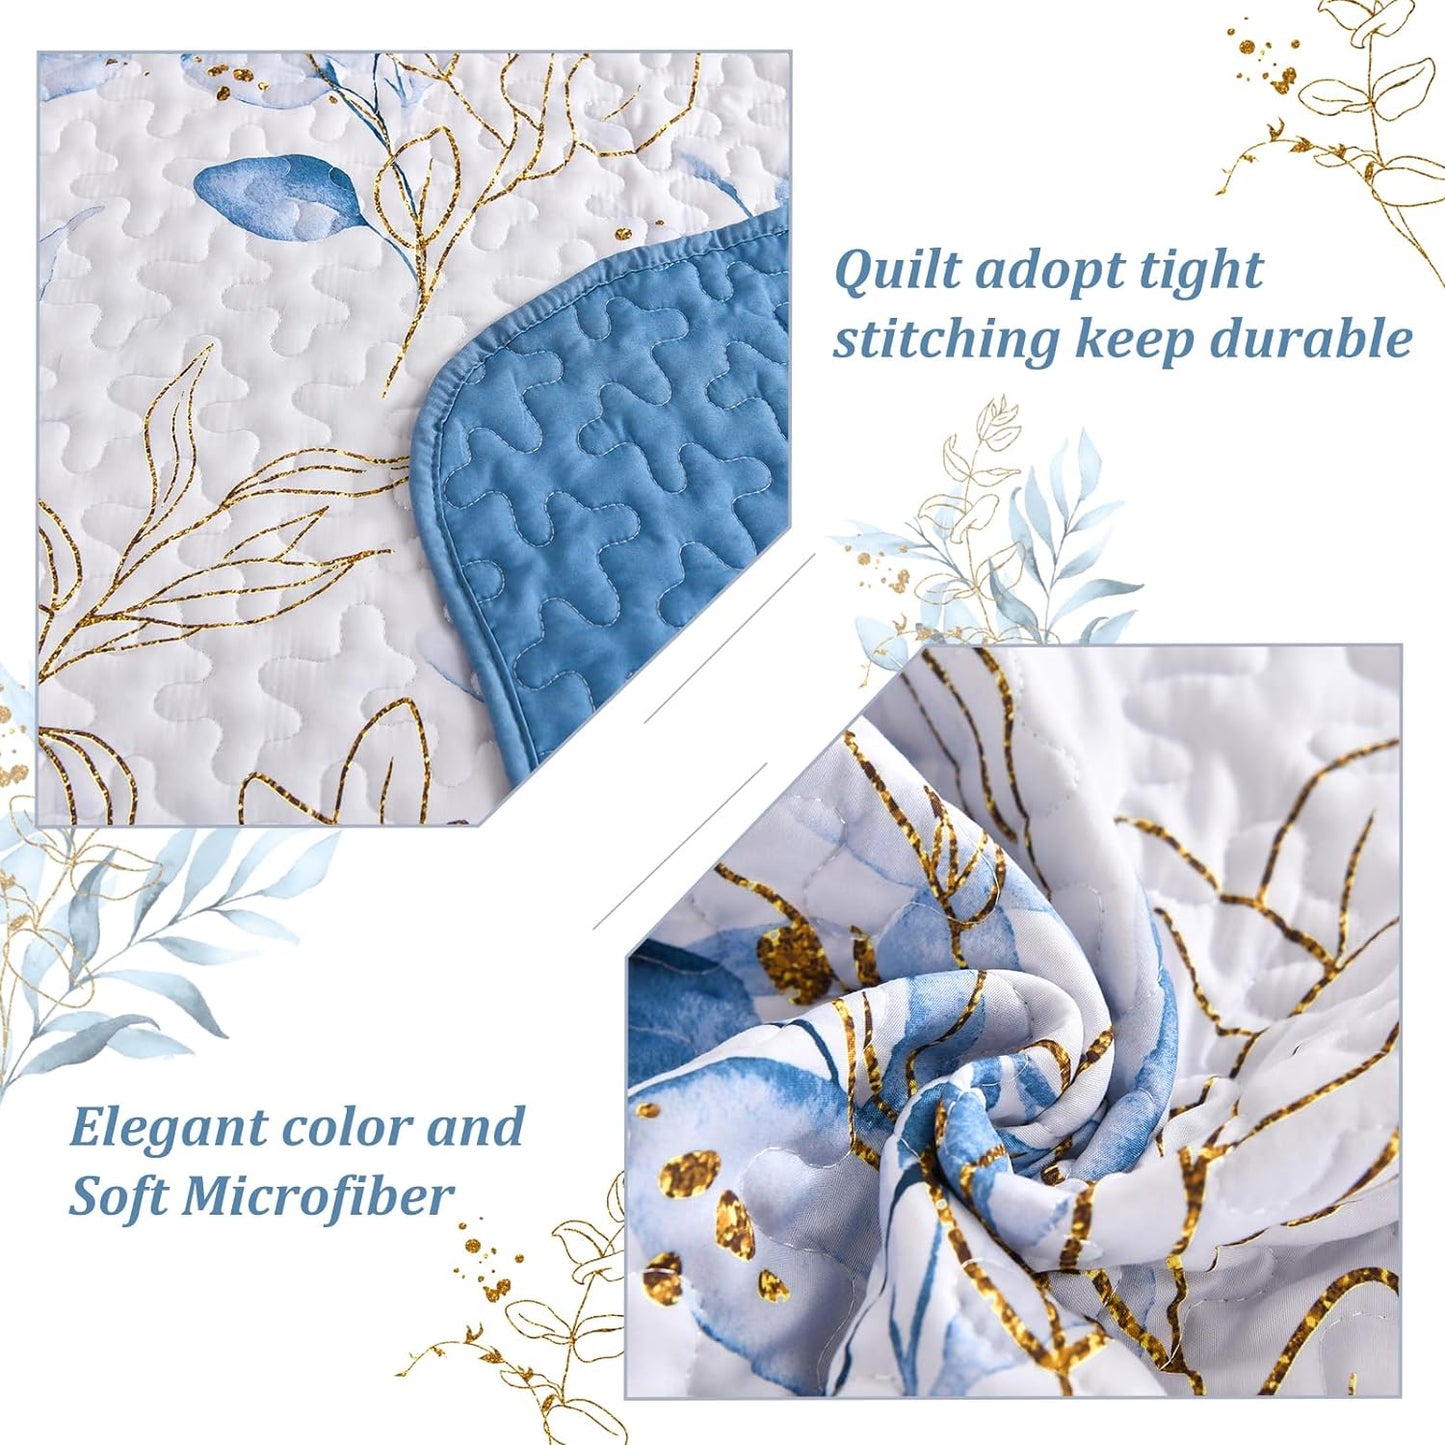 Botanical Blue & Gold Leaves Reversible 3 Piece Bedding Quilt Set